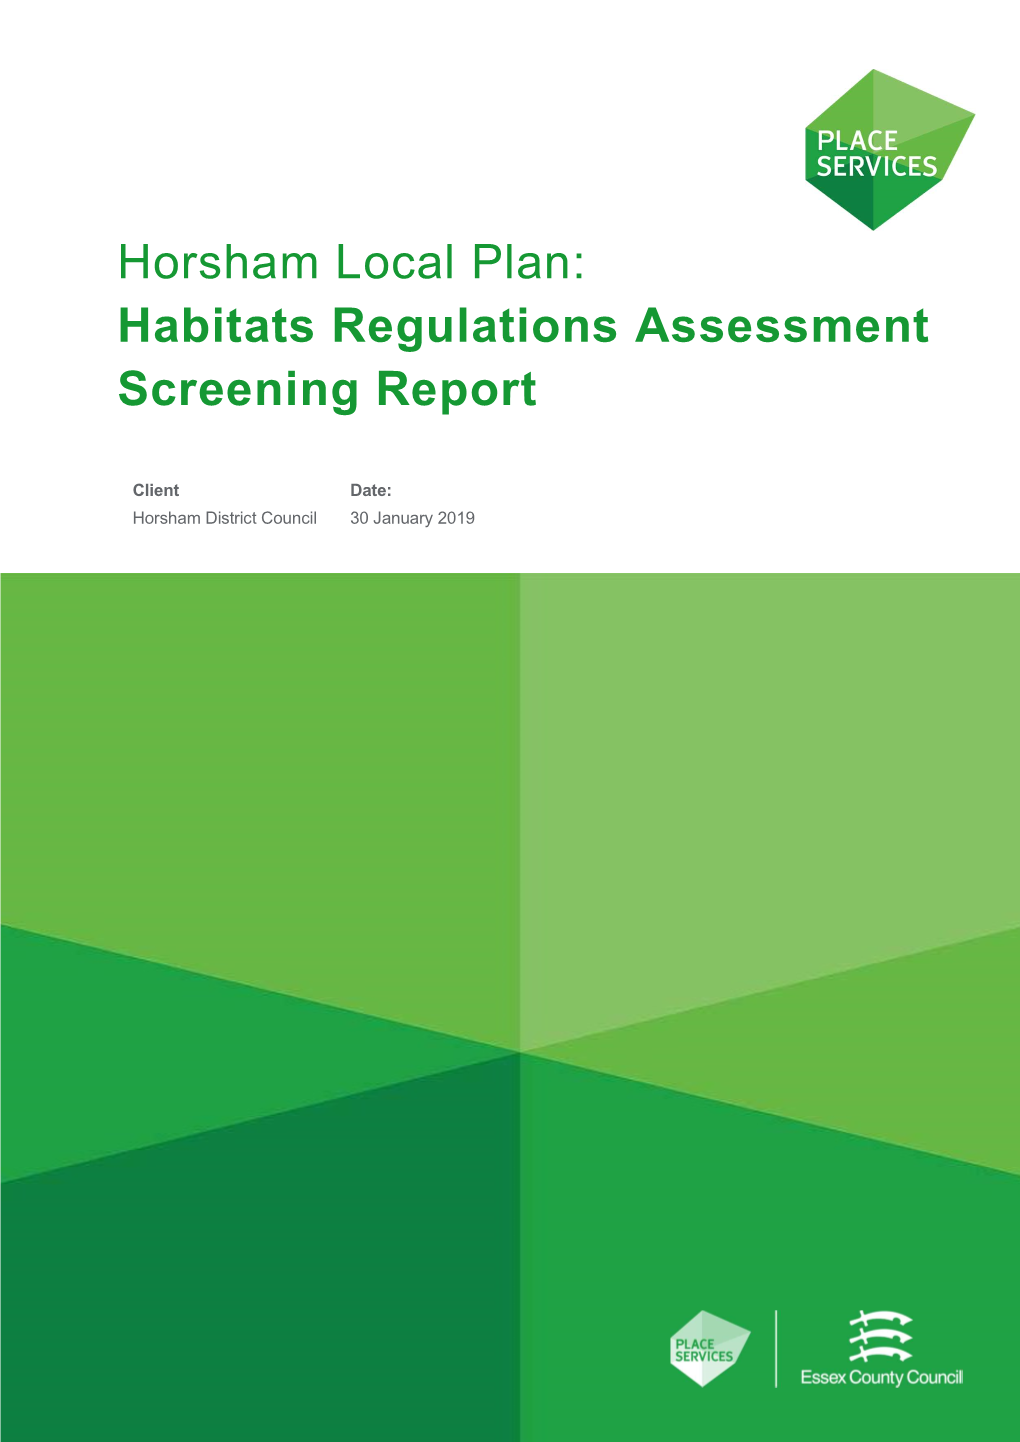 Place Services Horsham Local Plan Habitat Regulations Assessment 30